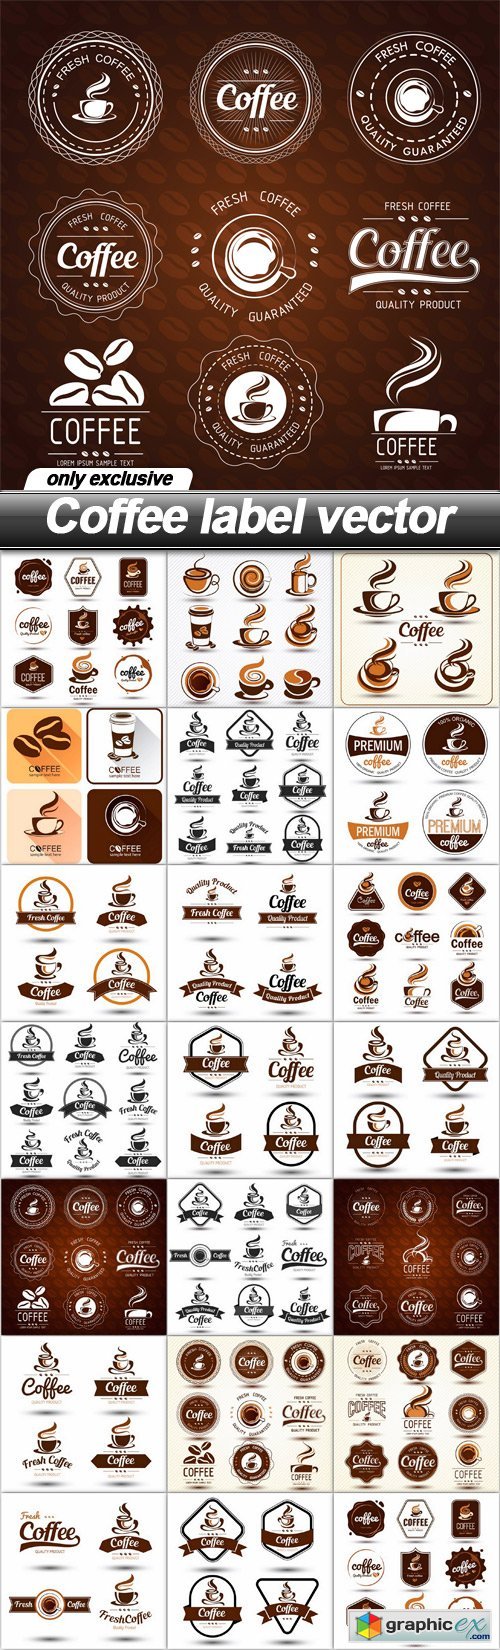 Coffee label vector - 20 EPS